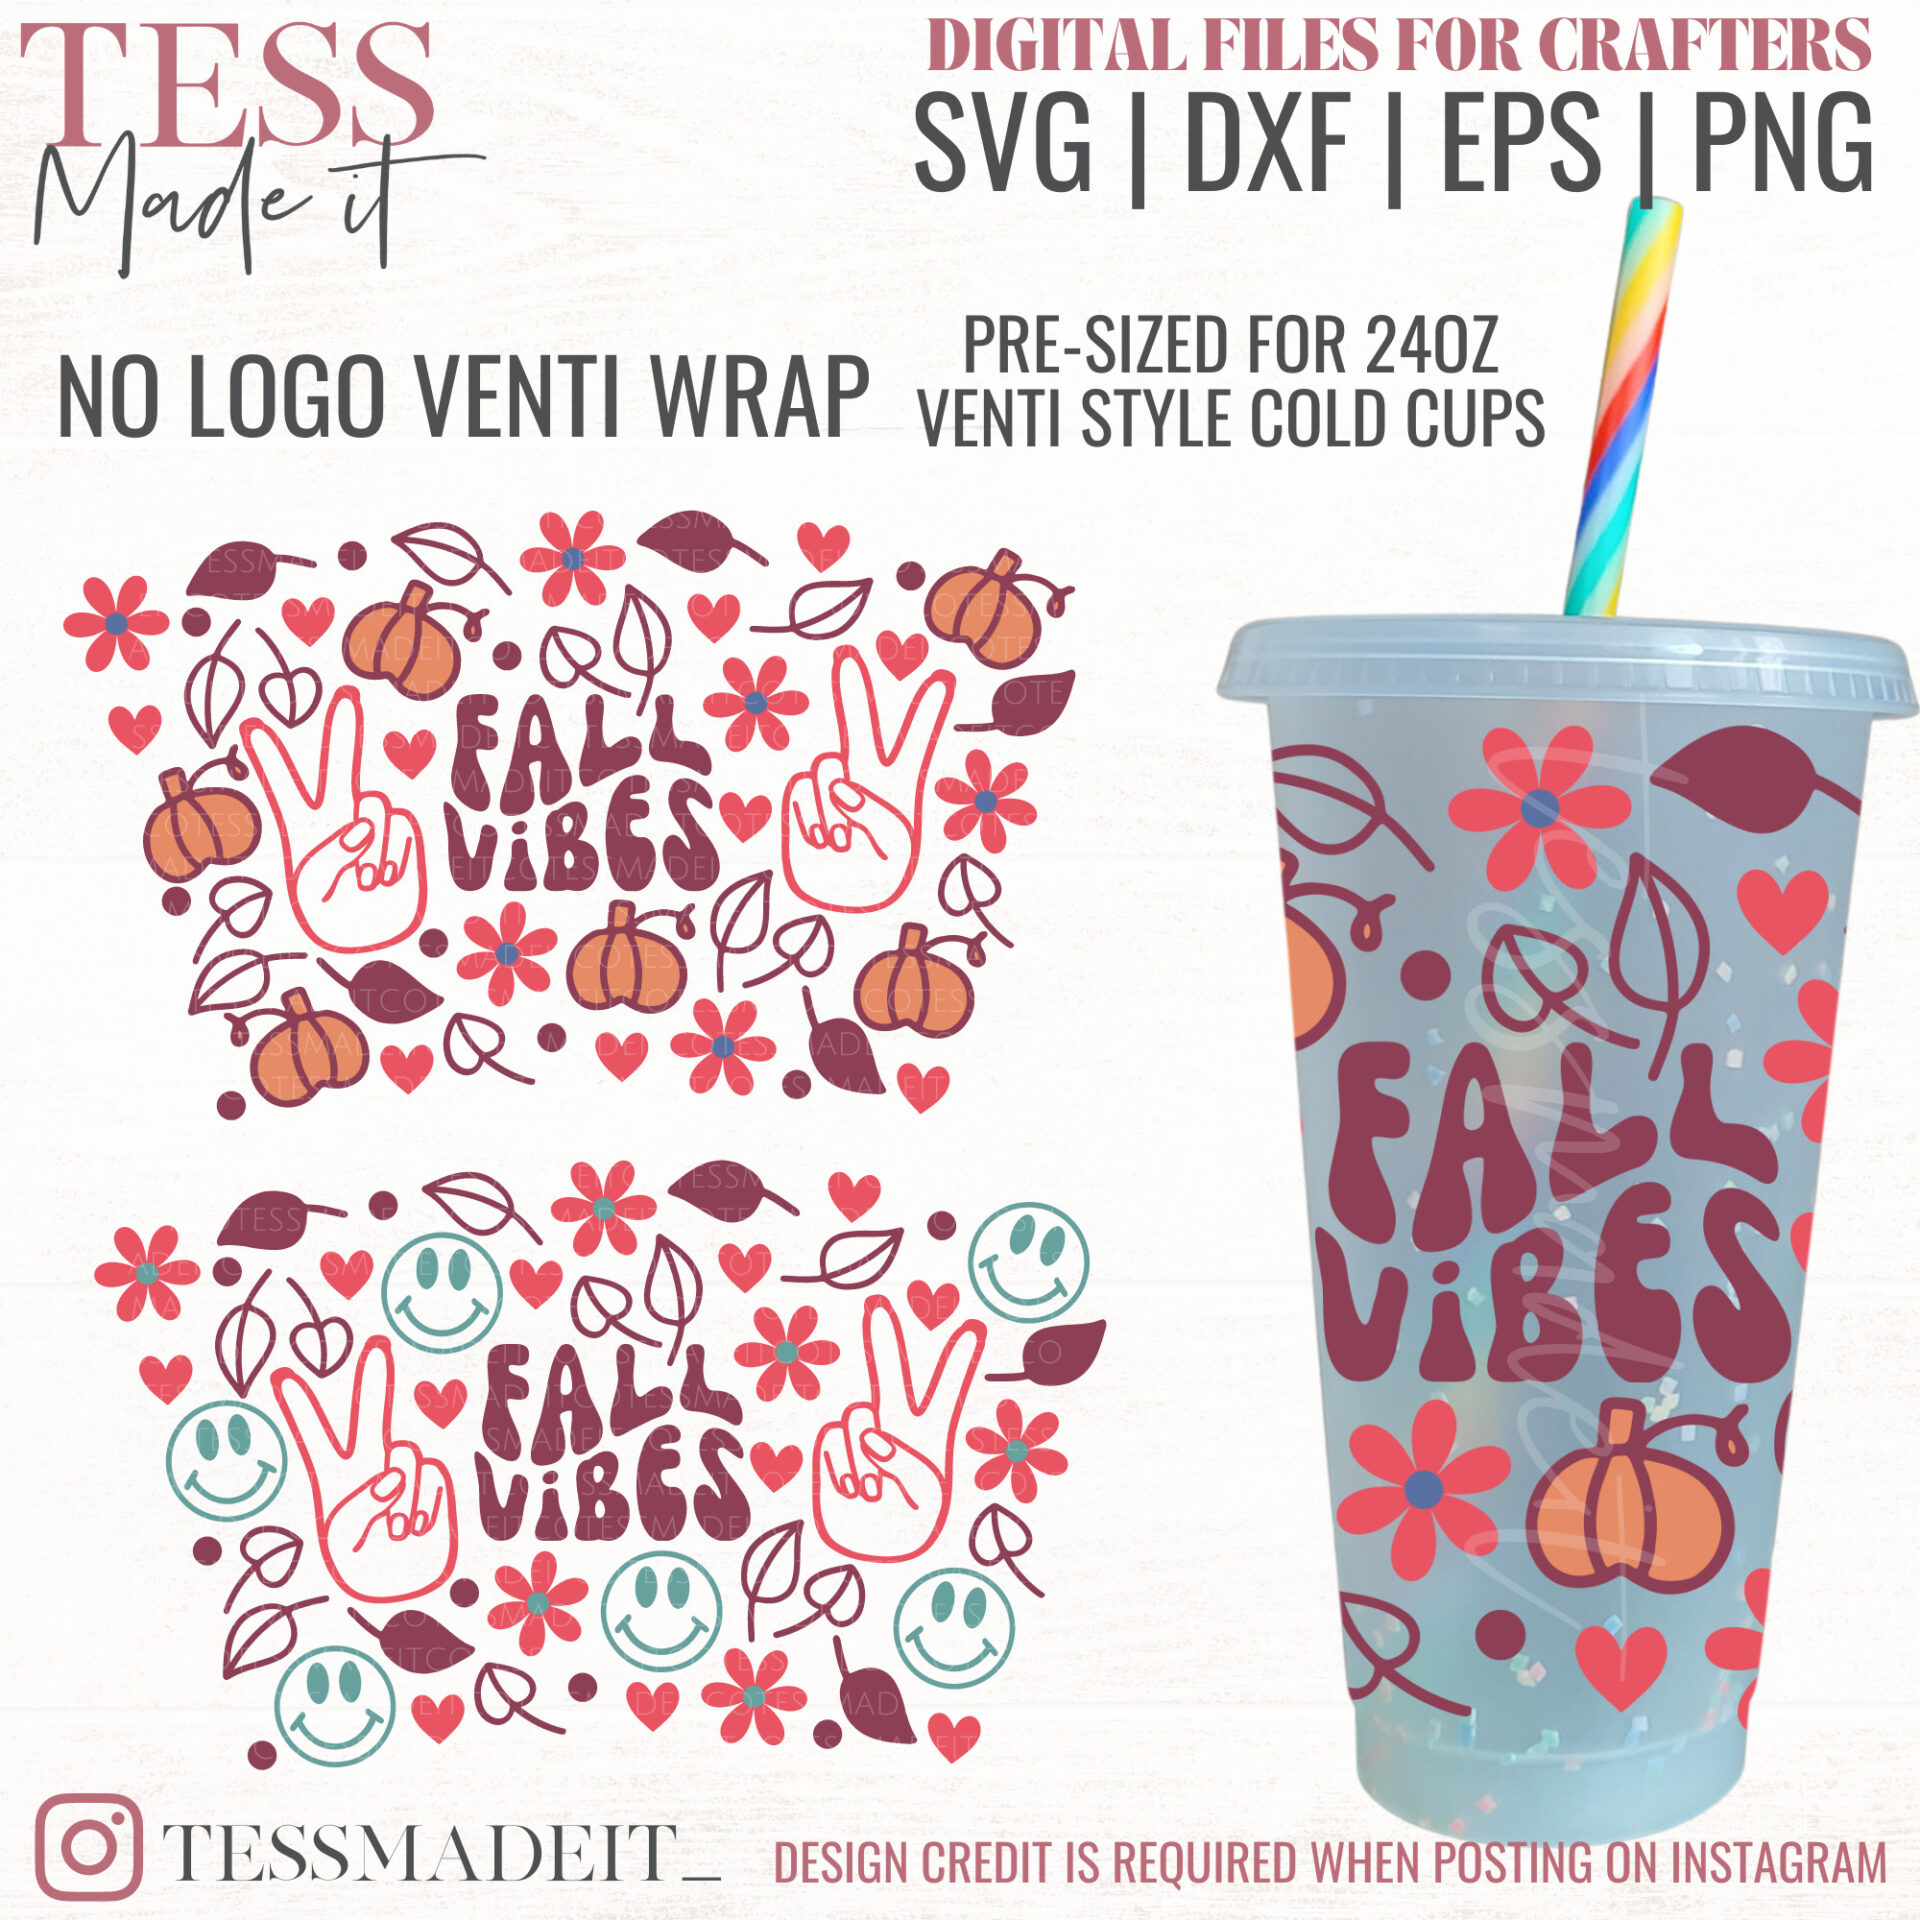 Retro Cold Cup Wrap - Venti No Logo SVG - Tess Made It